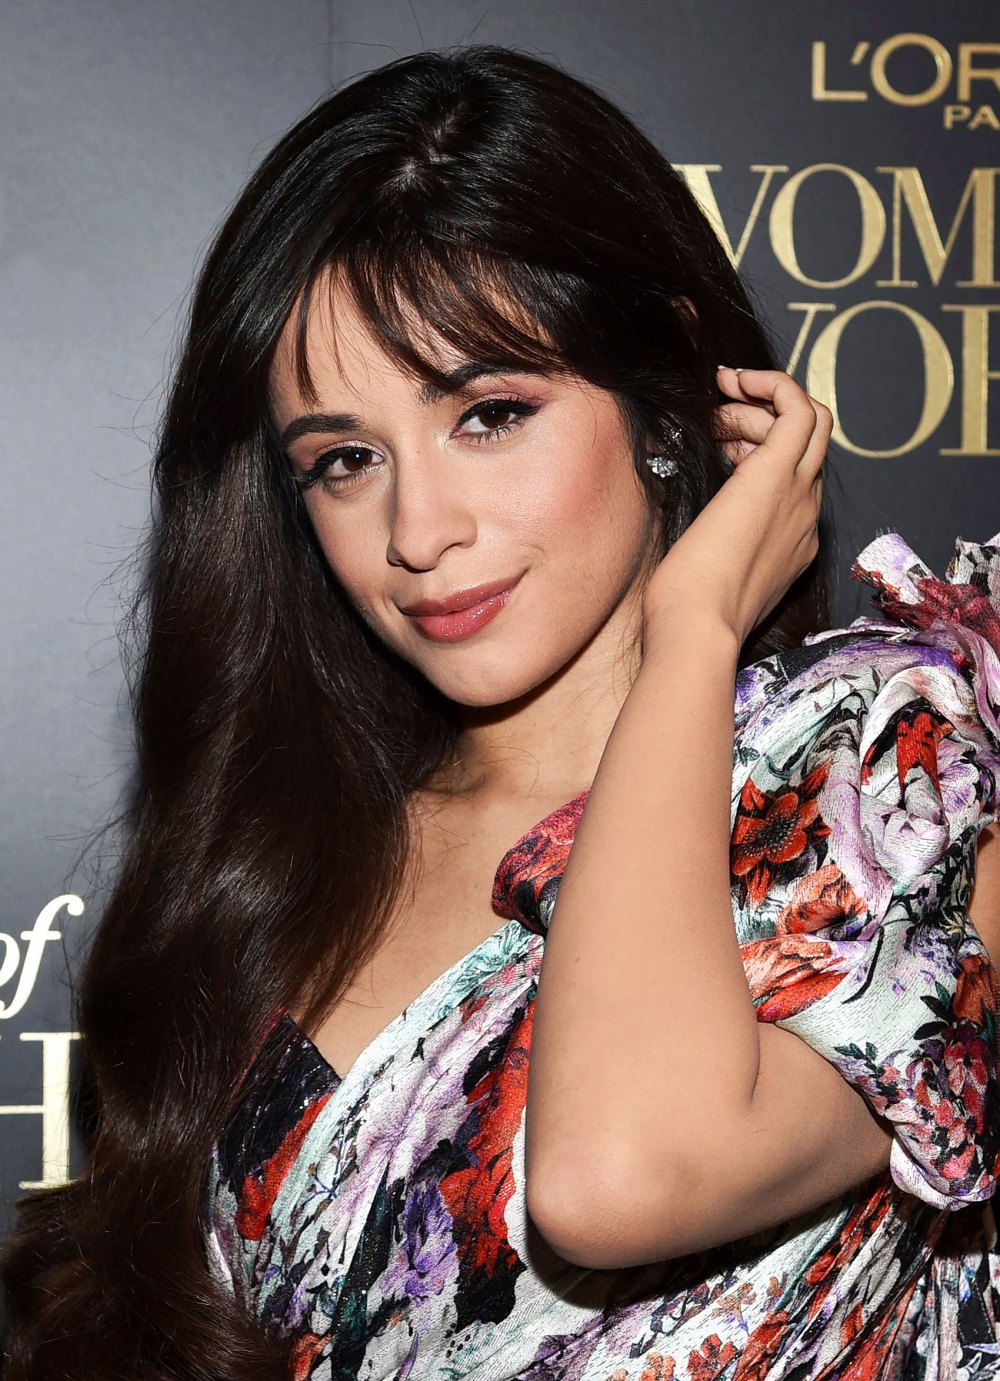 Camila Cabello's Mom Trims the Singer's Bangs Amid the COVID-19 Quarantine